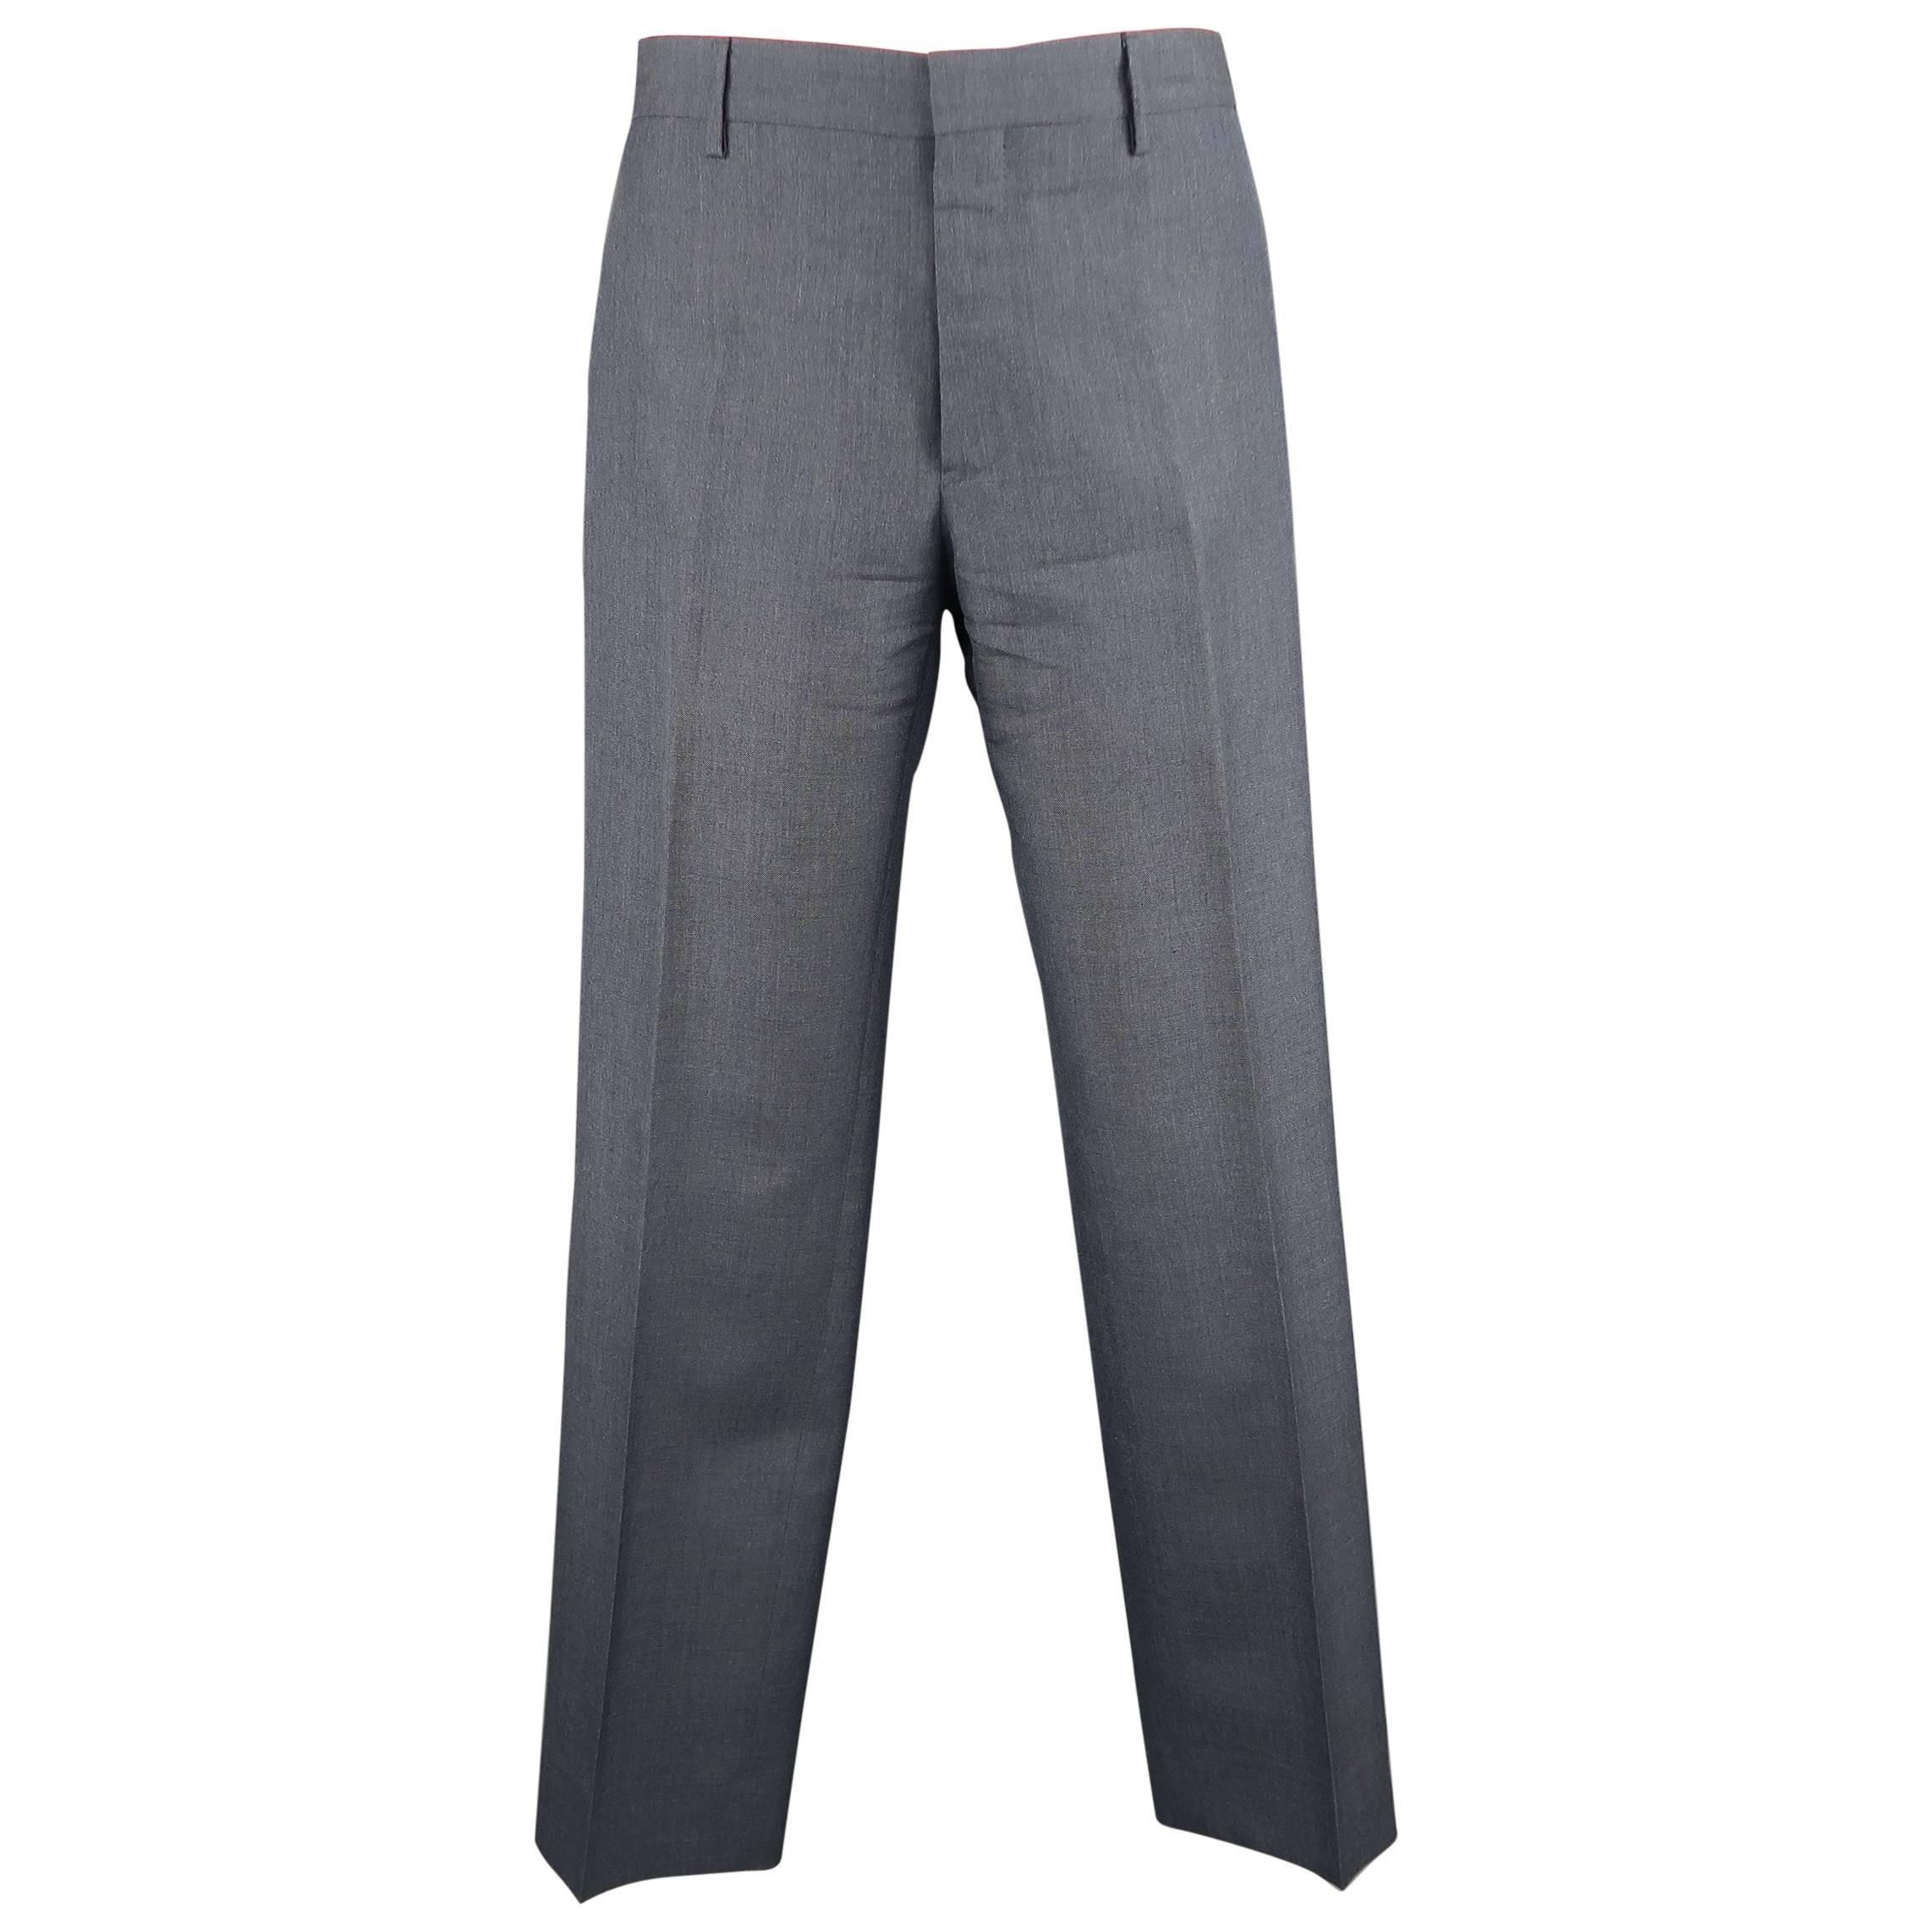 Men's PRADA Size 30 Steel Blue Gray Solid Mohair / Wool Dress Pants